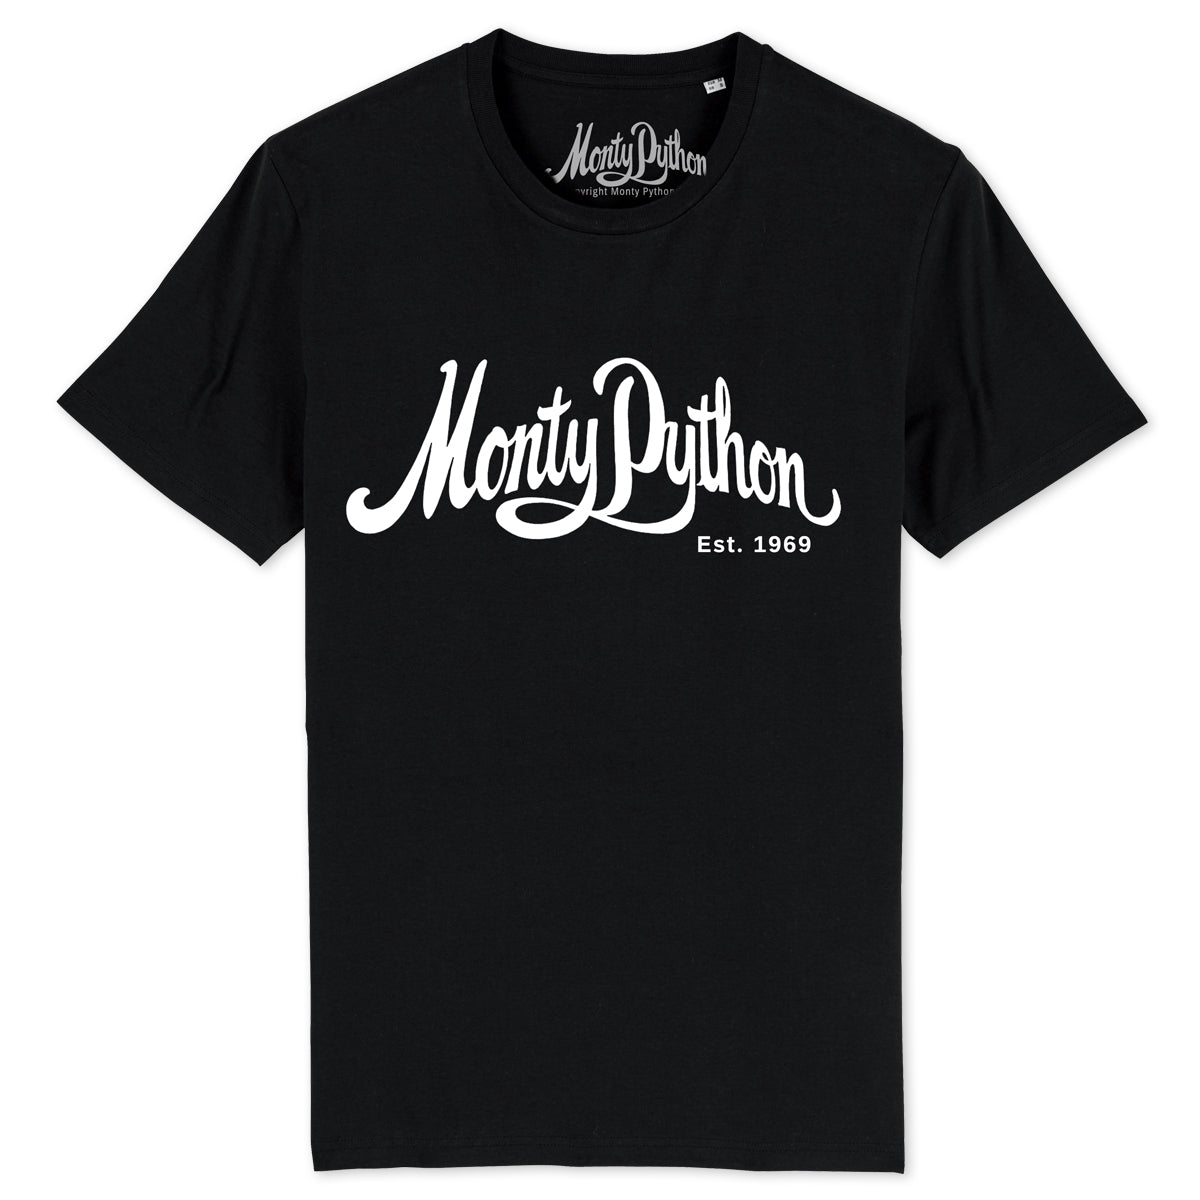 Monty Python - Monty Python 1969 Black T-Shirt